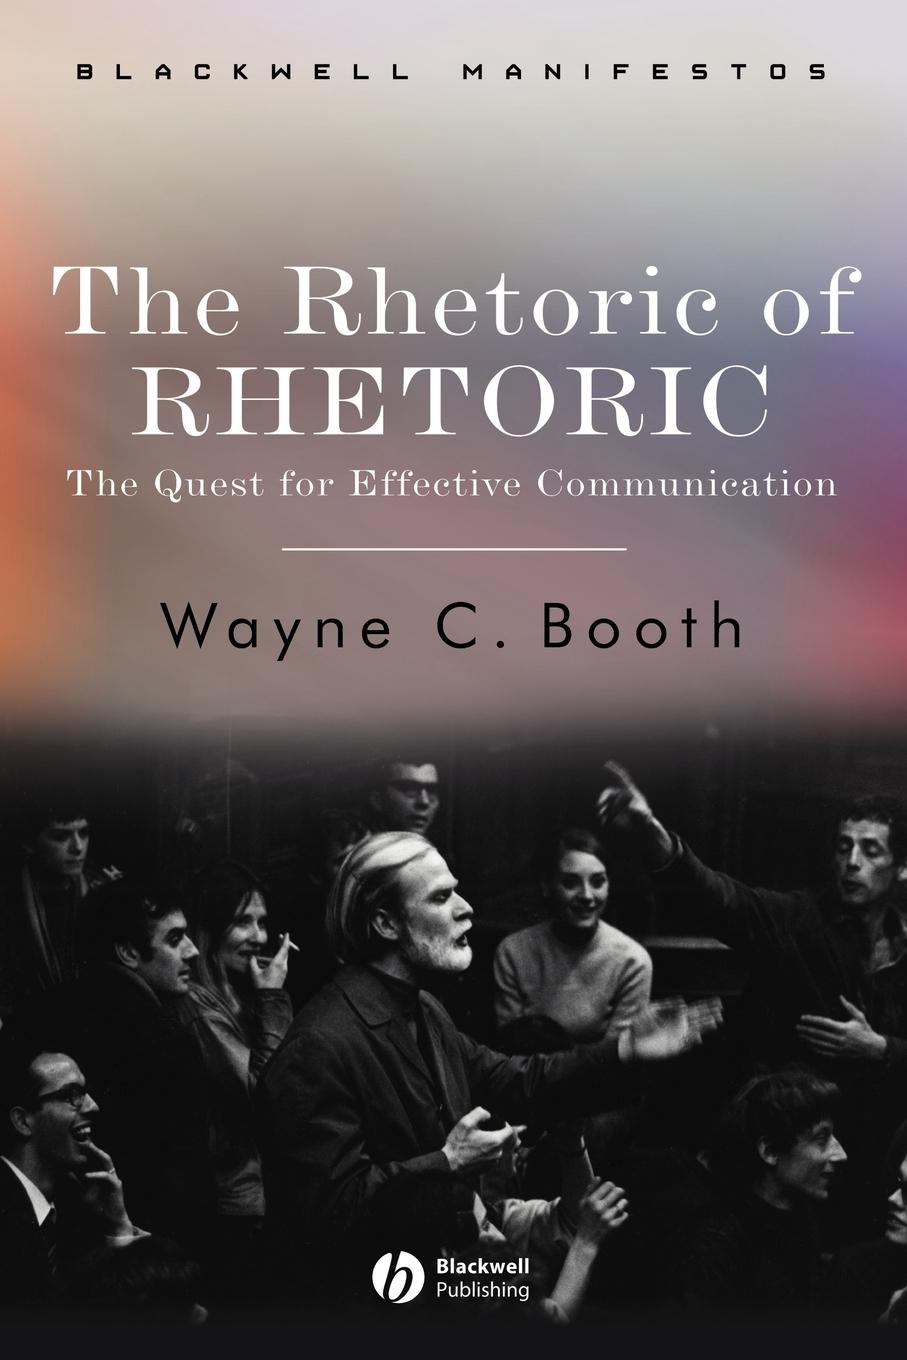 Rhetoric of Rhetoric - Booth